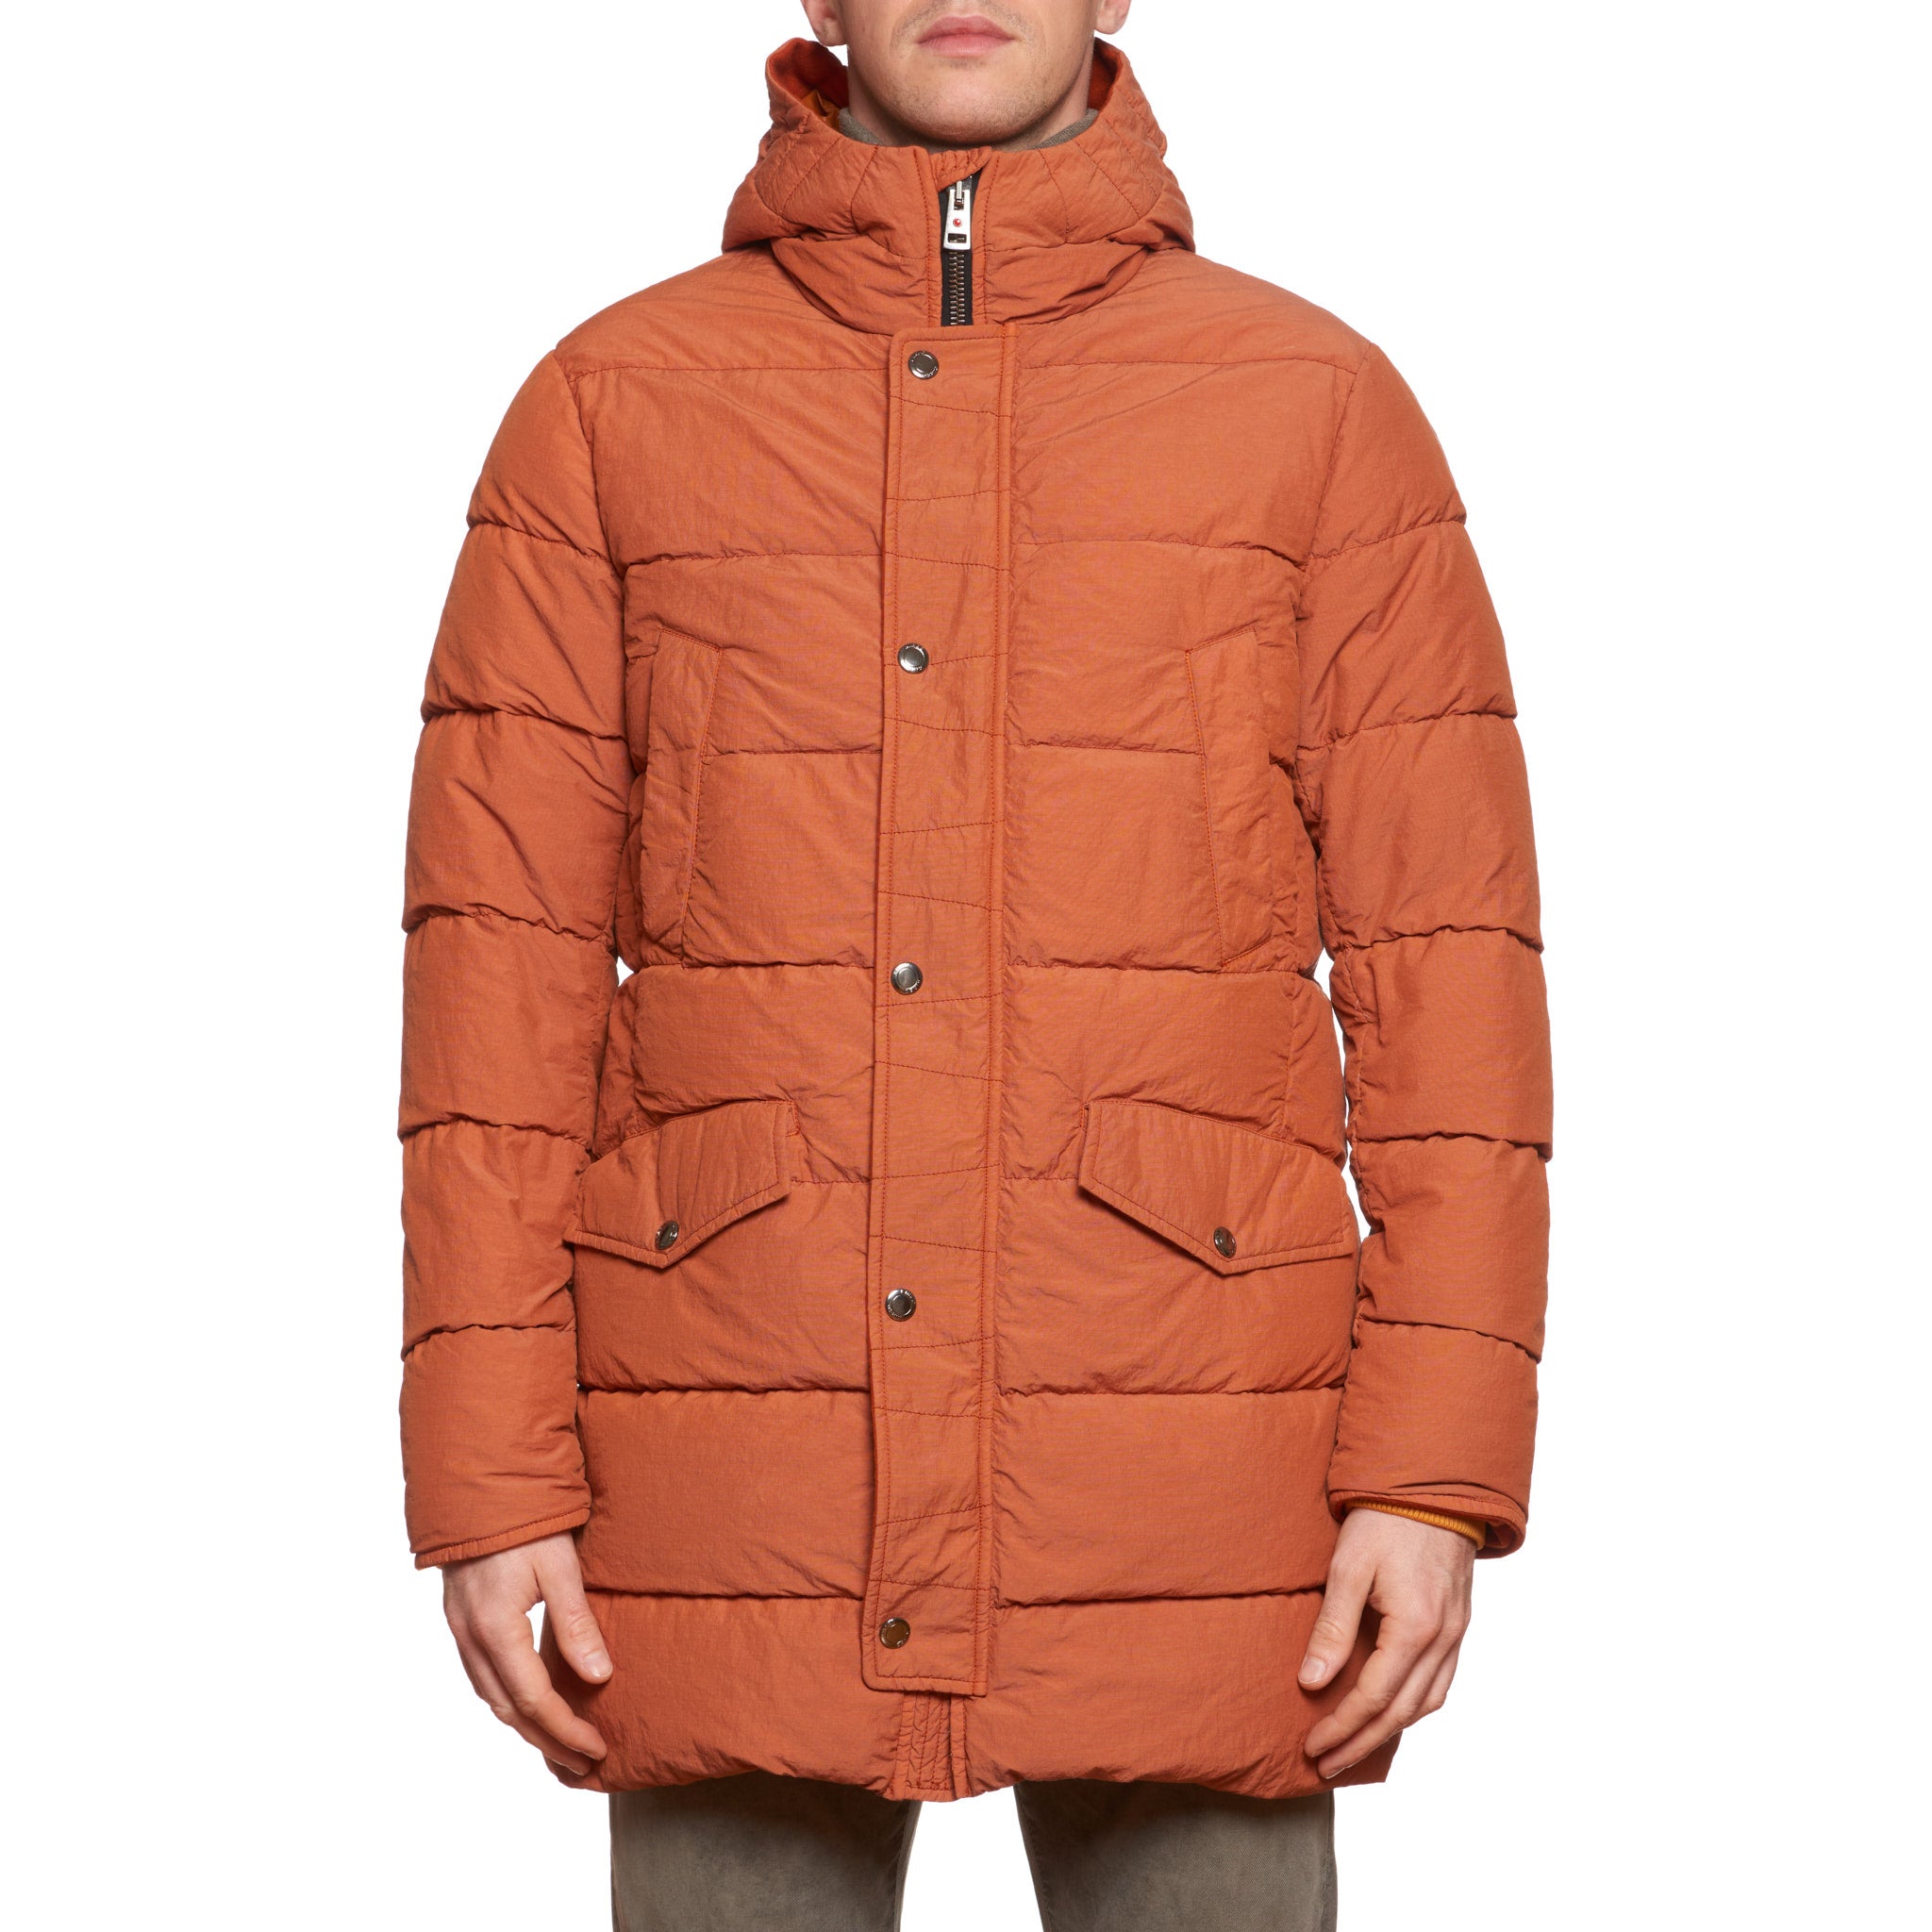 KITON KIRED Orange Goose Down Hooded Parka Puffer Jacket Coat 50 NEW M